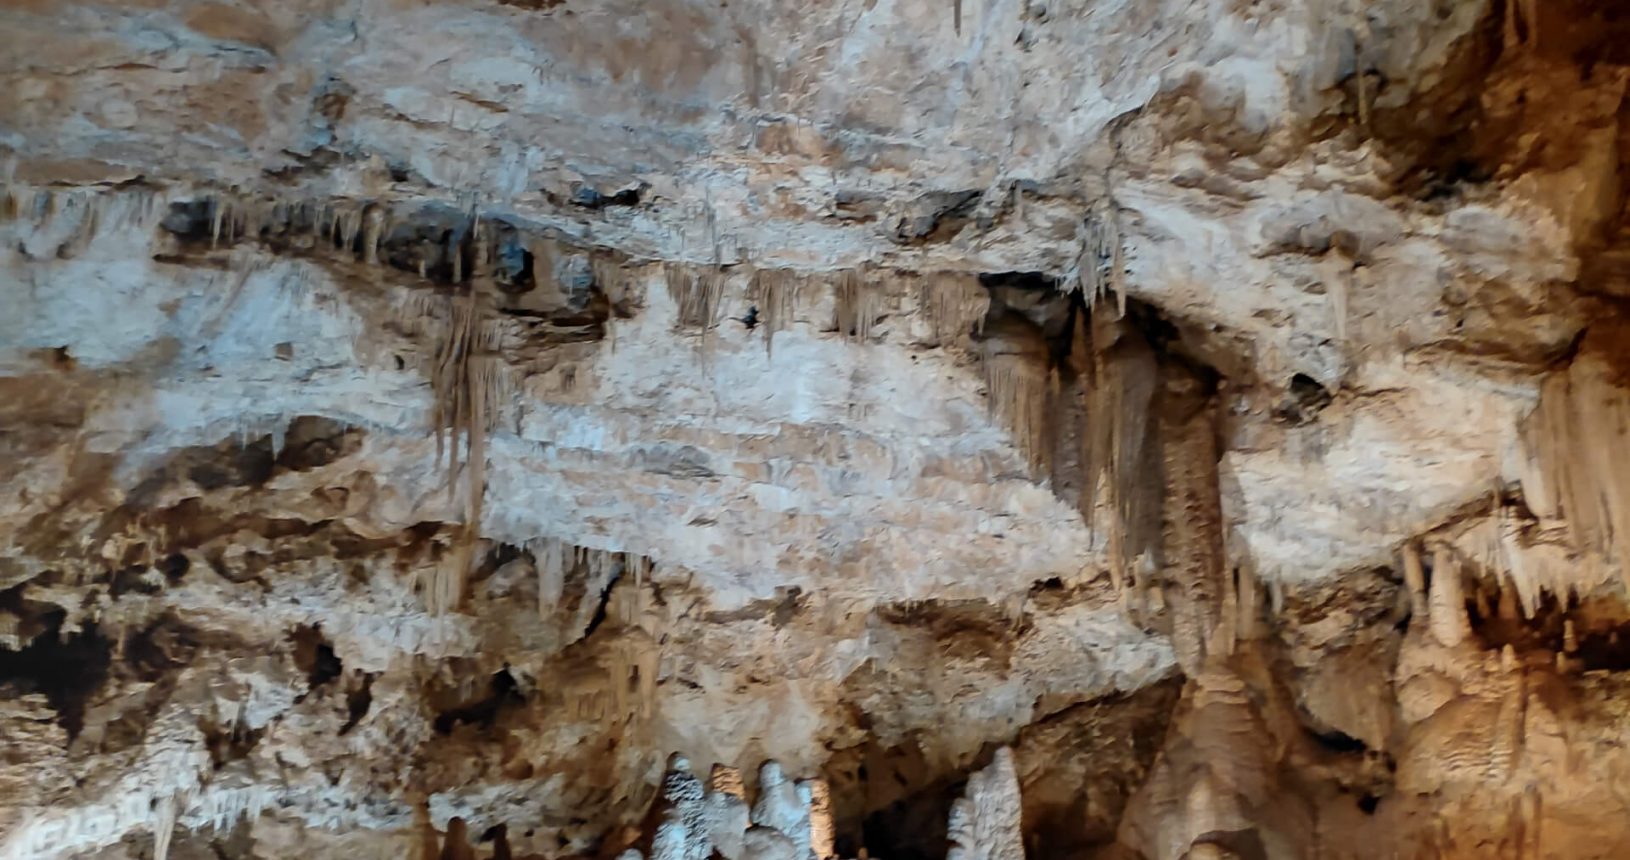 Both stalactites and stalagmites in Lipa Cave